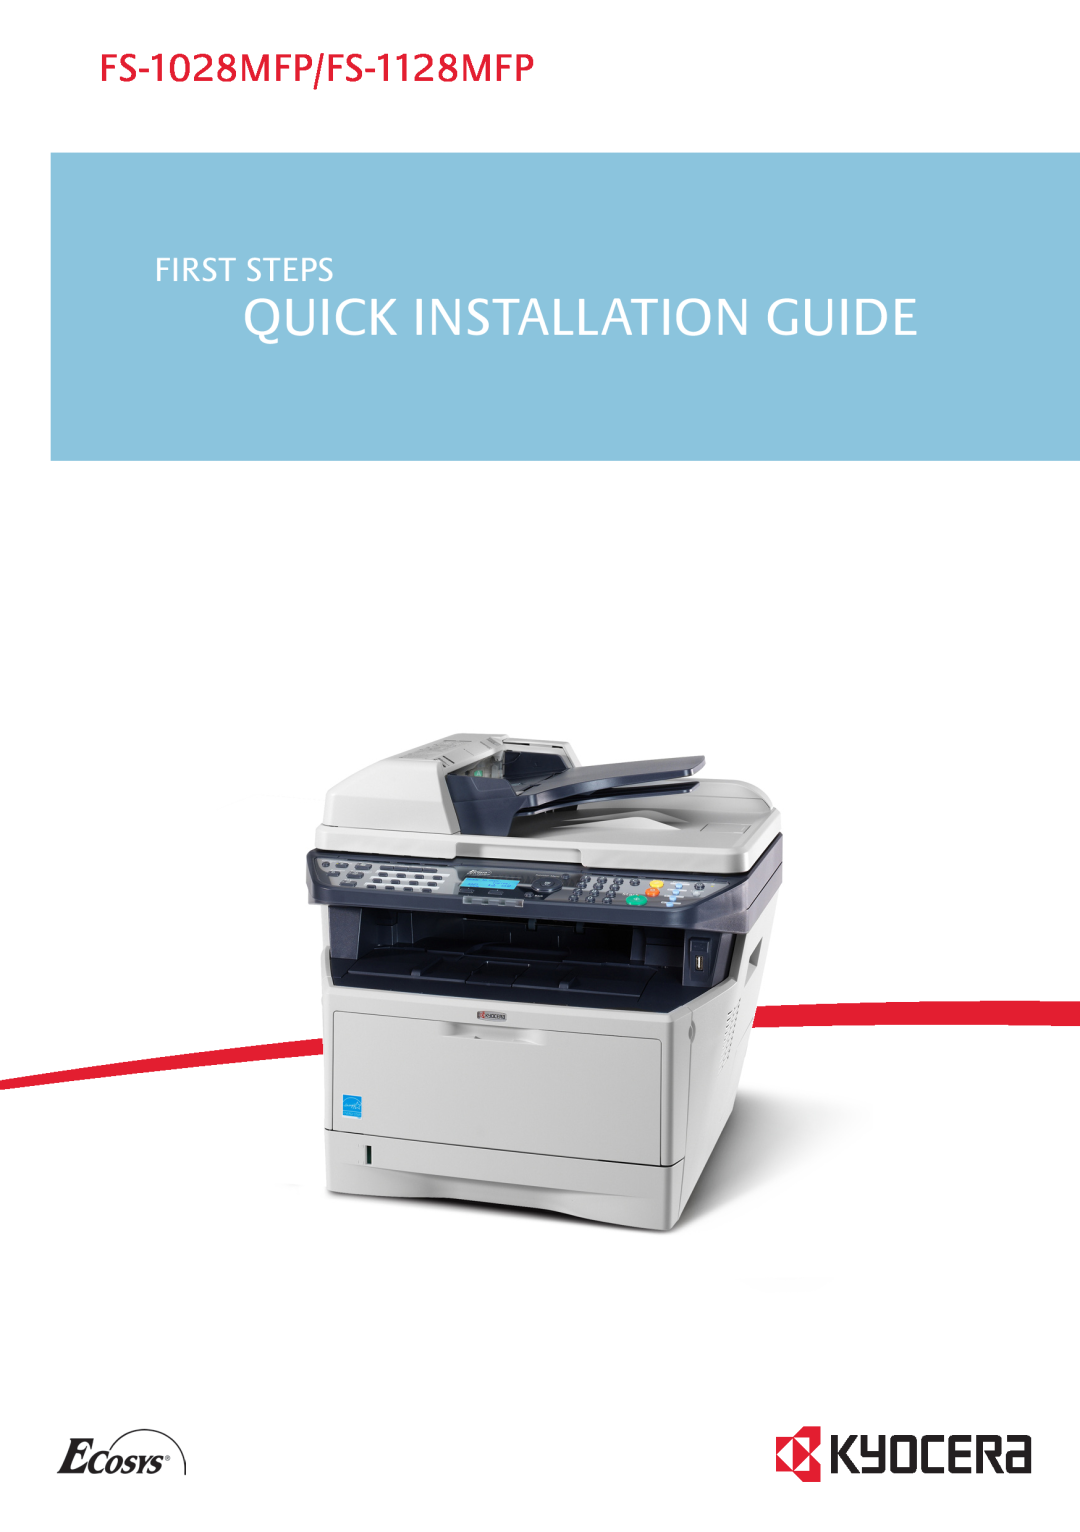 Kyocera manual Quick Installation Guide, FS-1028MFP/FS-1128MFP, First Steps 